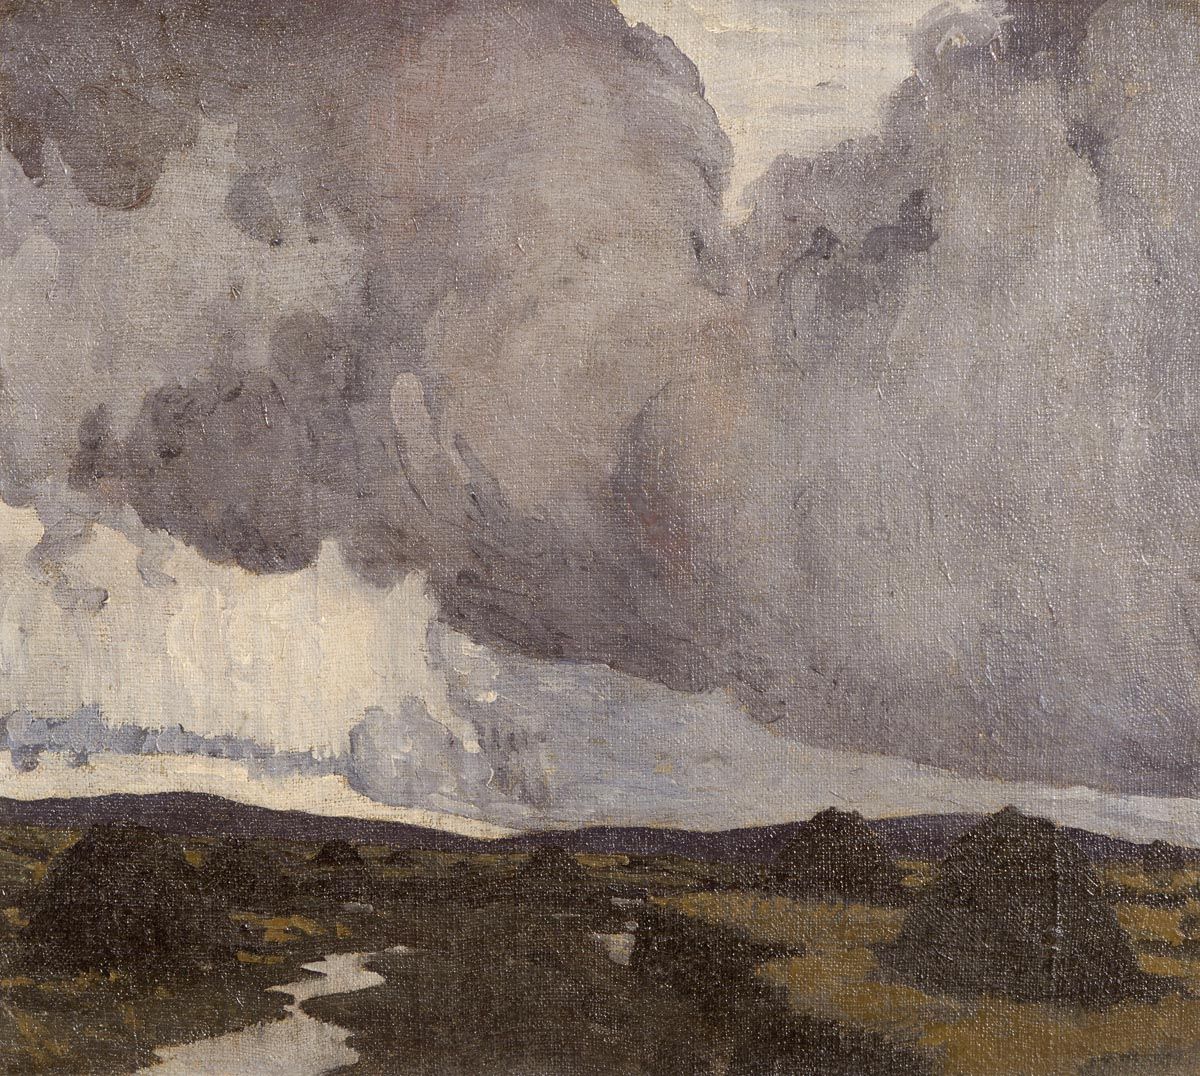 Paul Henry RHA (1876-1958), A Western Landscape 1919 at Morgan O'Driscoll Art Auctions